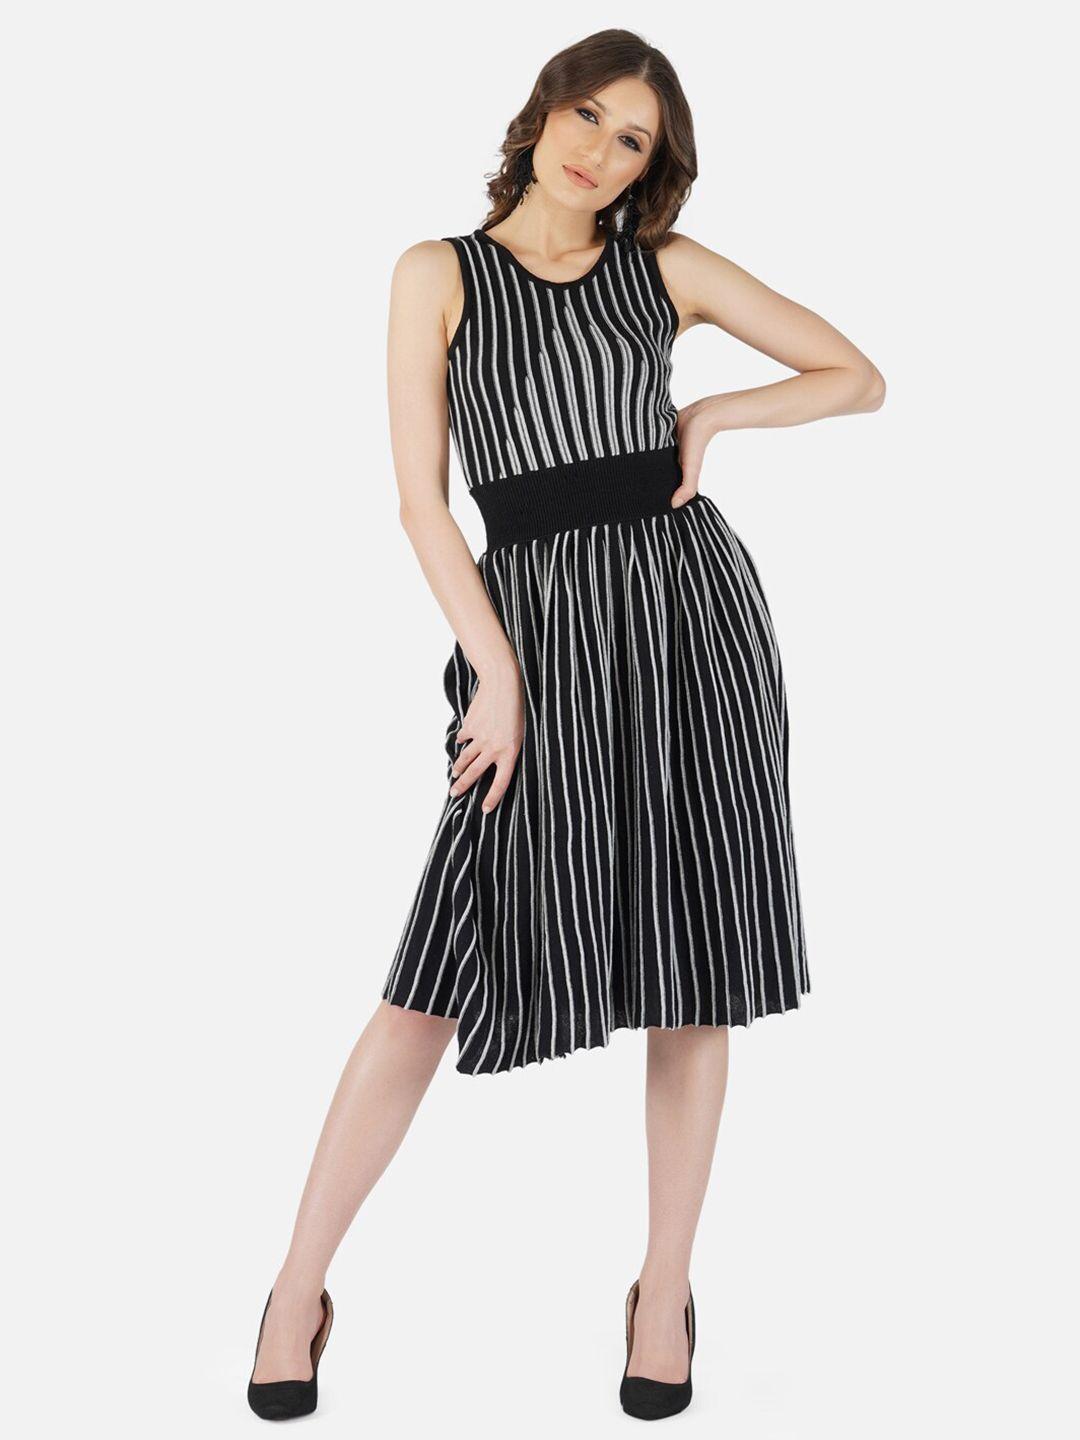 joe hazel black striped dress